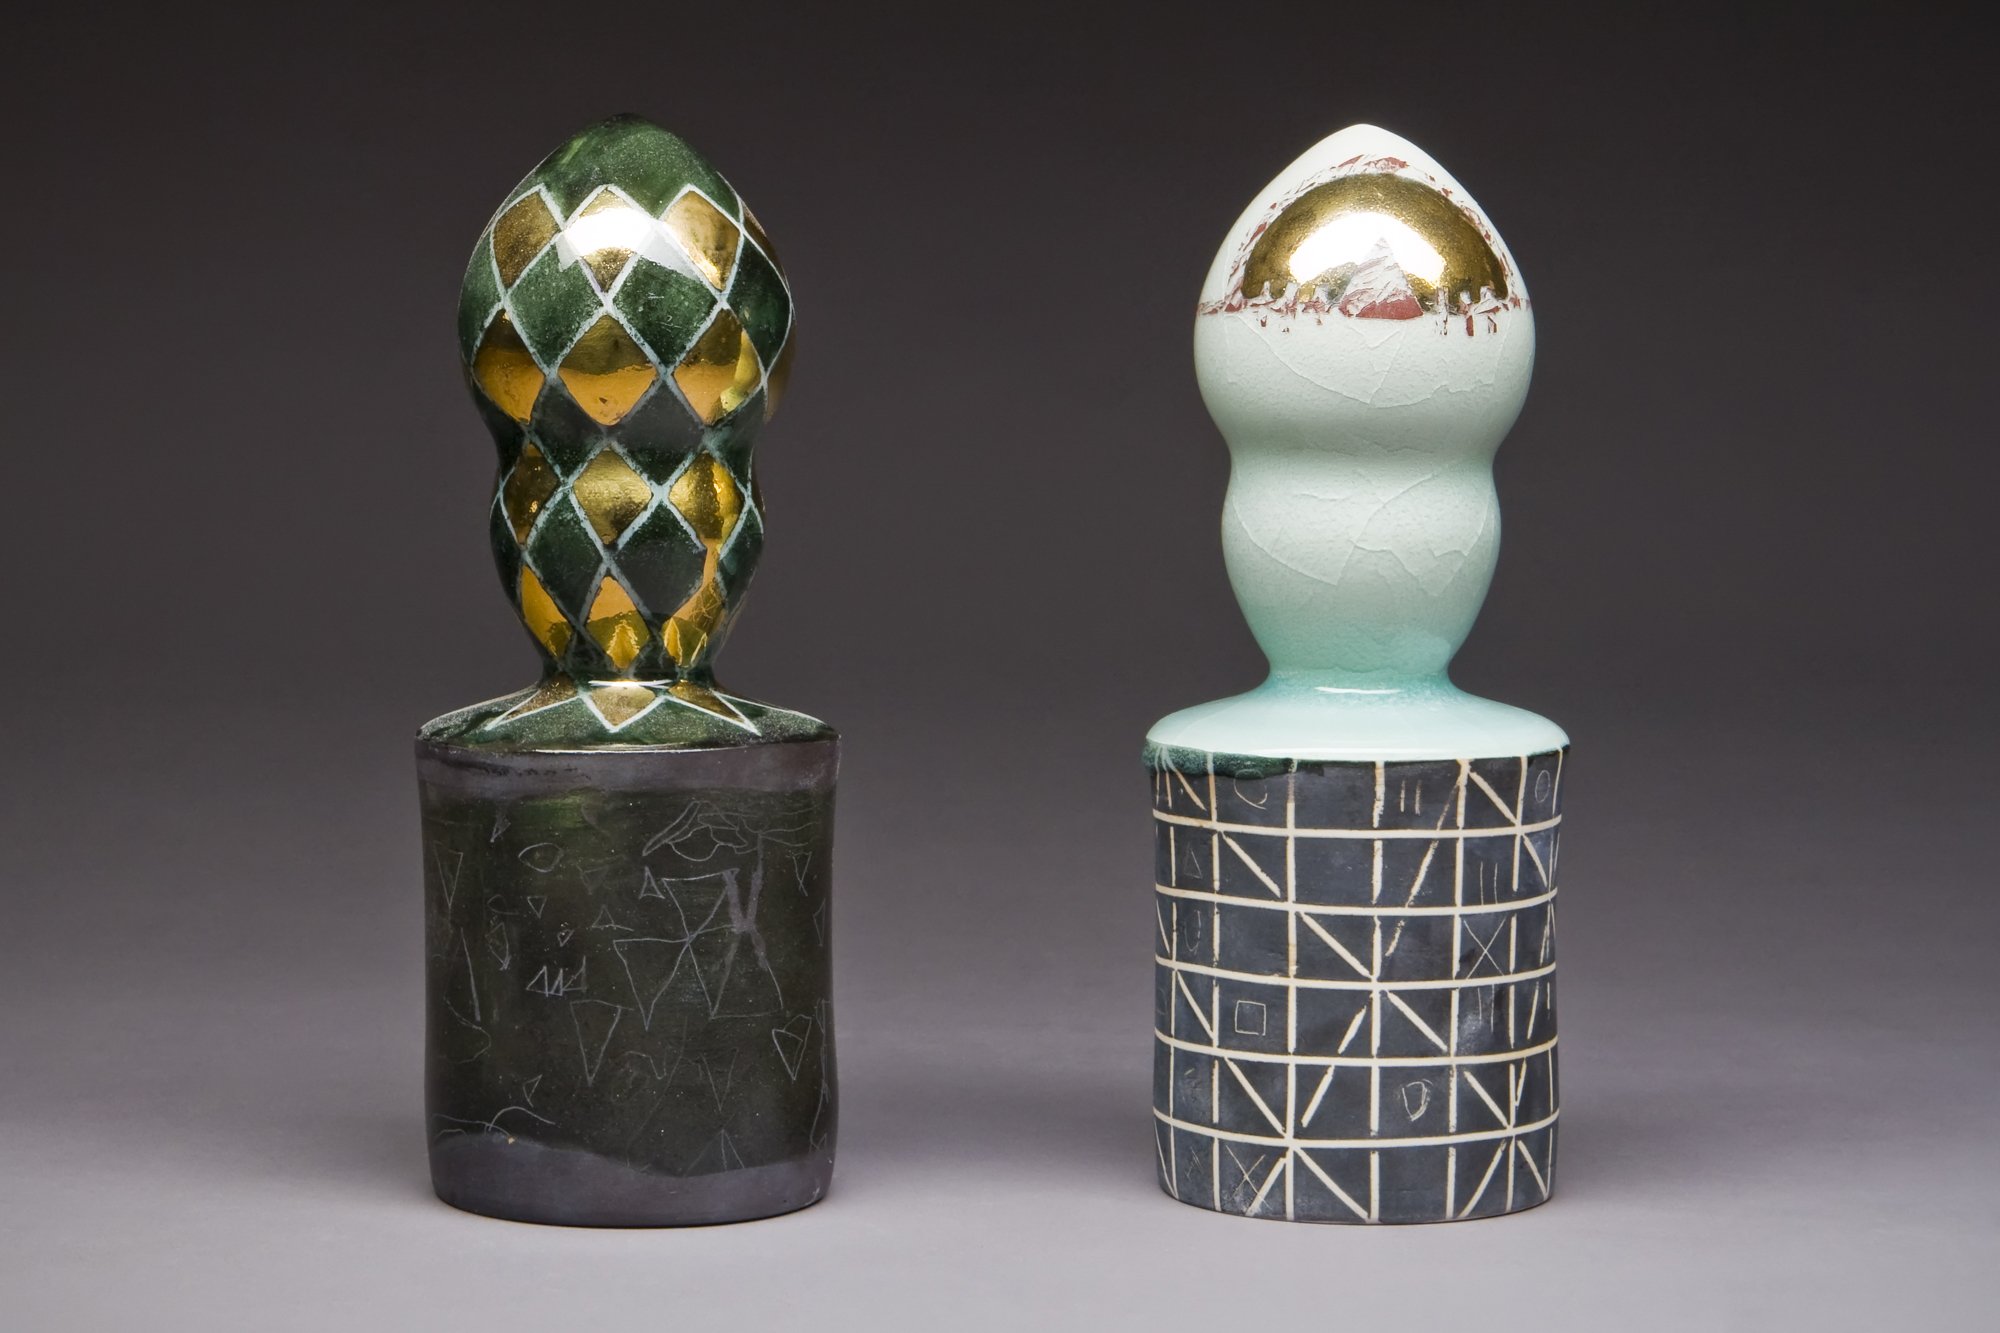  Spirit Killers Ceramic, Gold luster, Silver luster 7” x 3” x 3” (each) 2010 Photo Credit: Jim Walker  